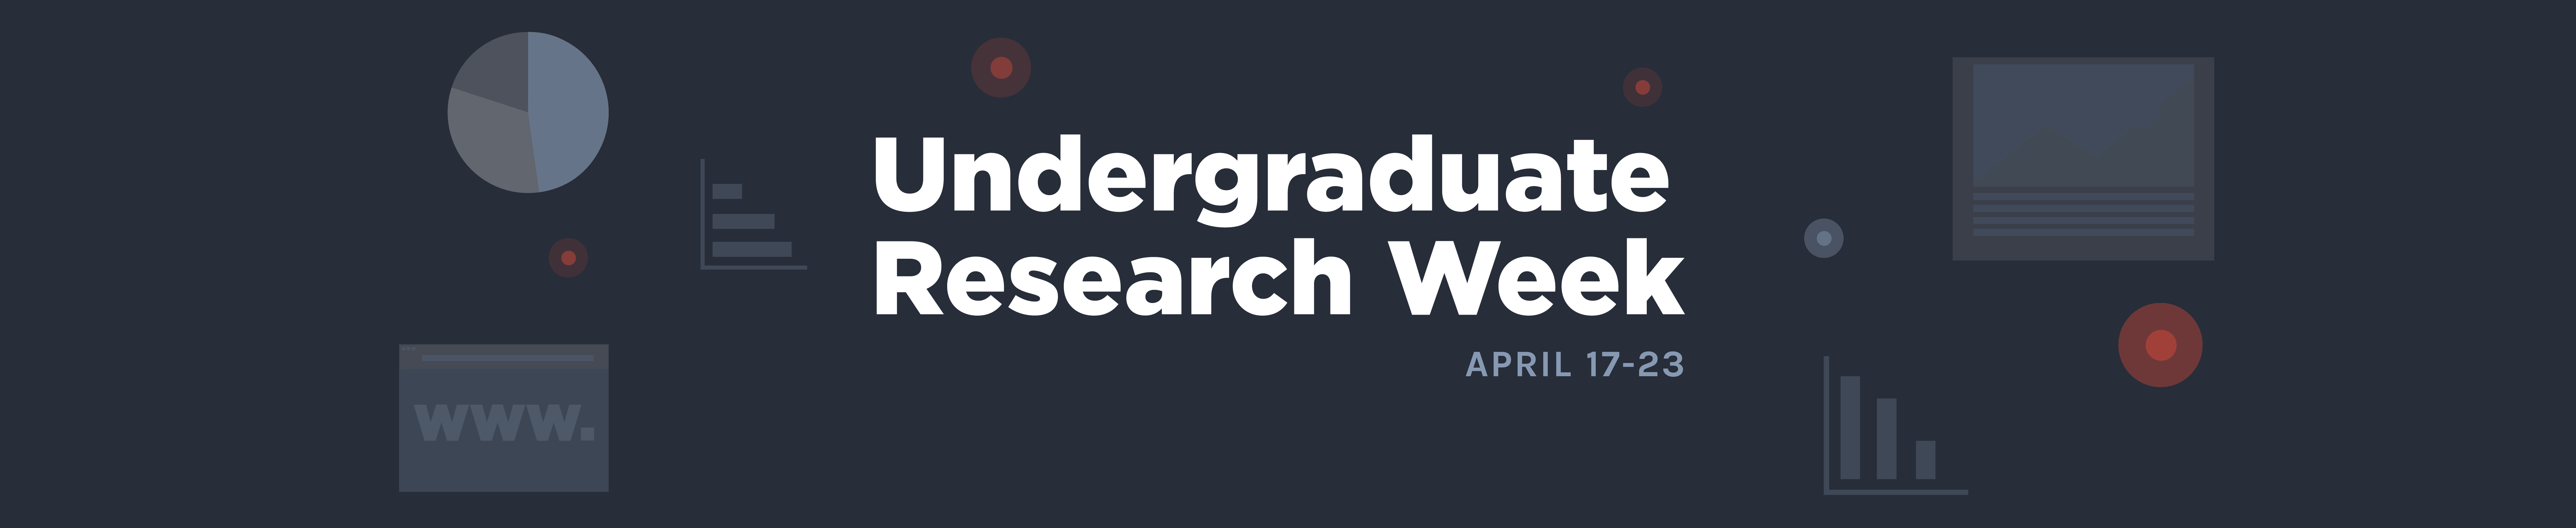 undergraduate research week 2016